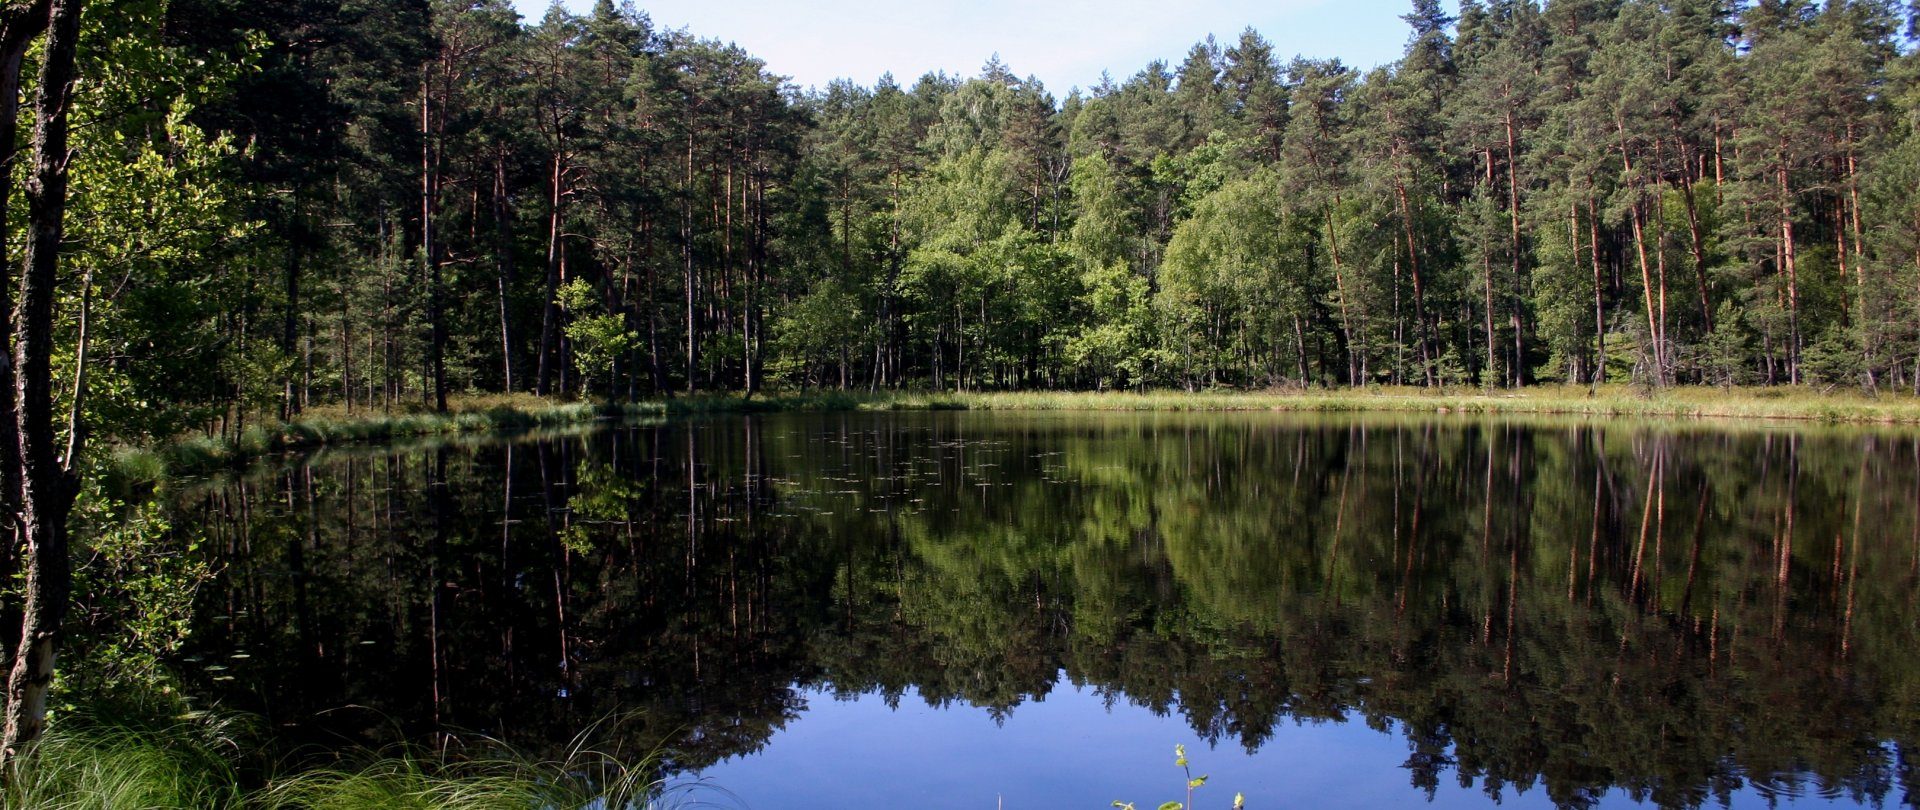 Park Narodowy Bory Tucholskie - Leśny skarb narodowy